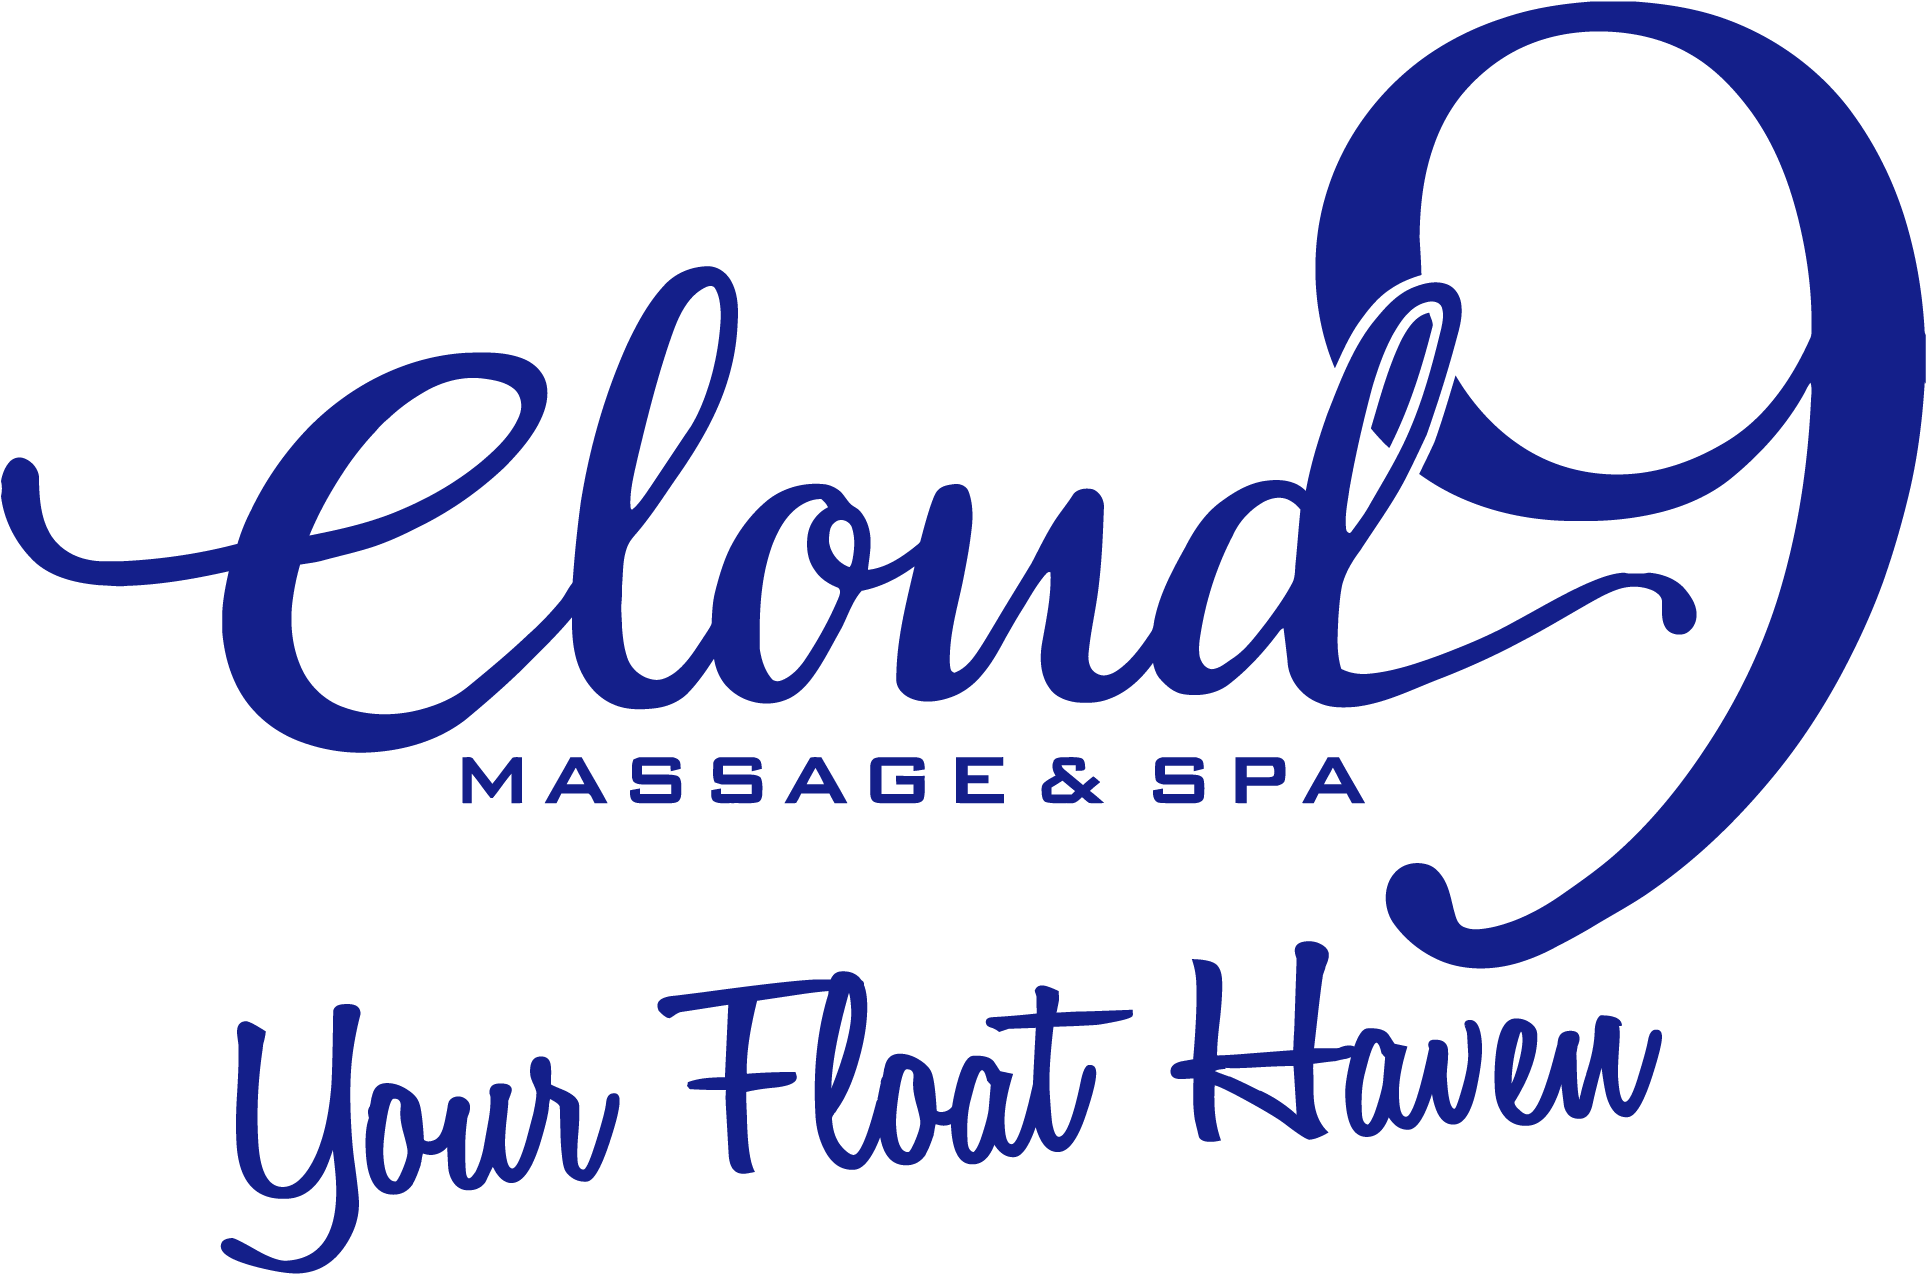 Cloud 9 Massage & Spa, Your Float Haven (2000x1333), Png Download